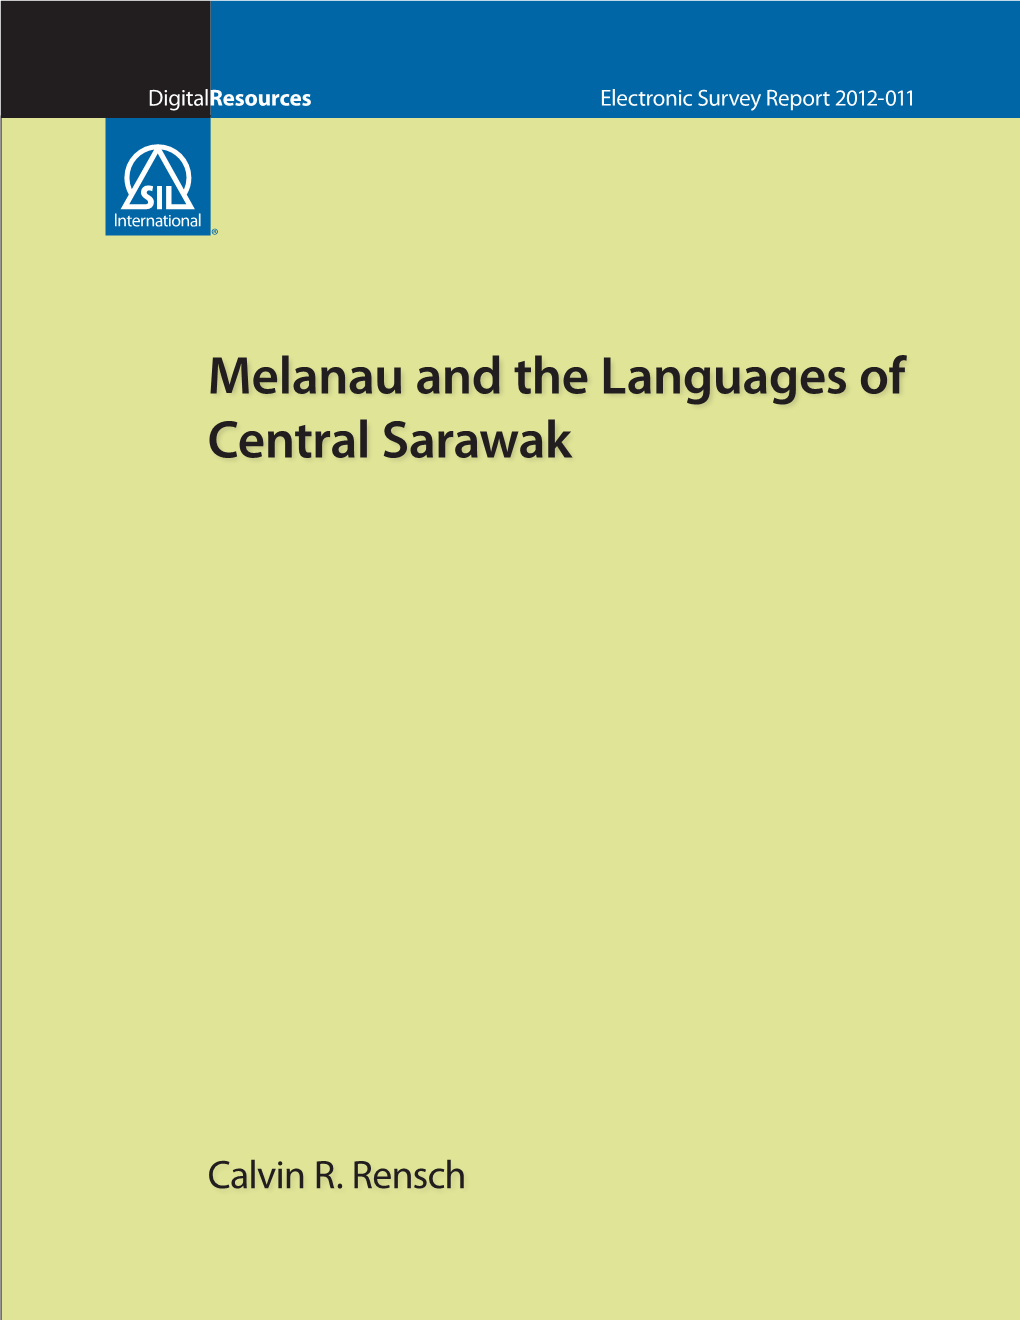 Melanau and the Languages of Central Sarawak